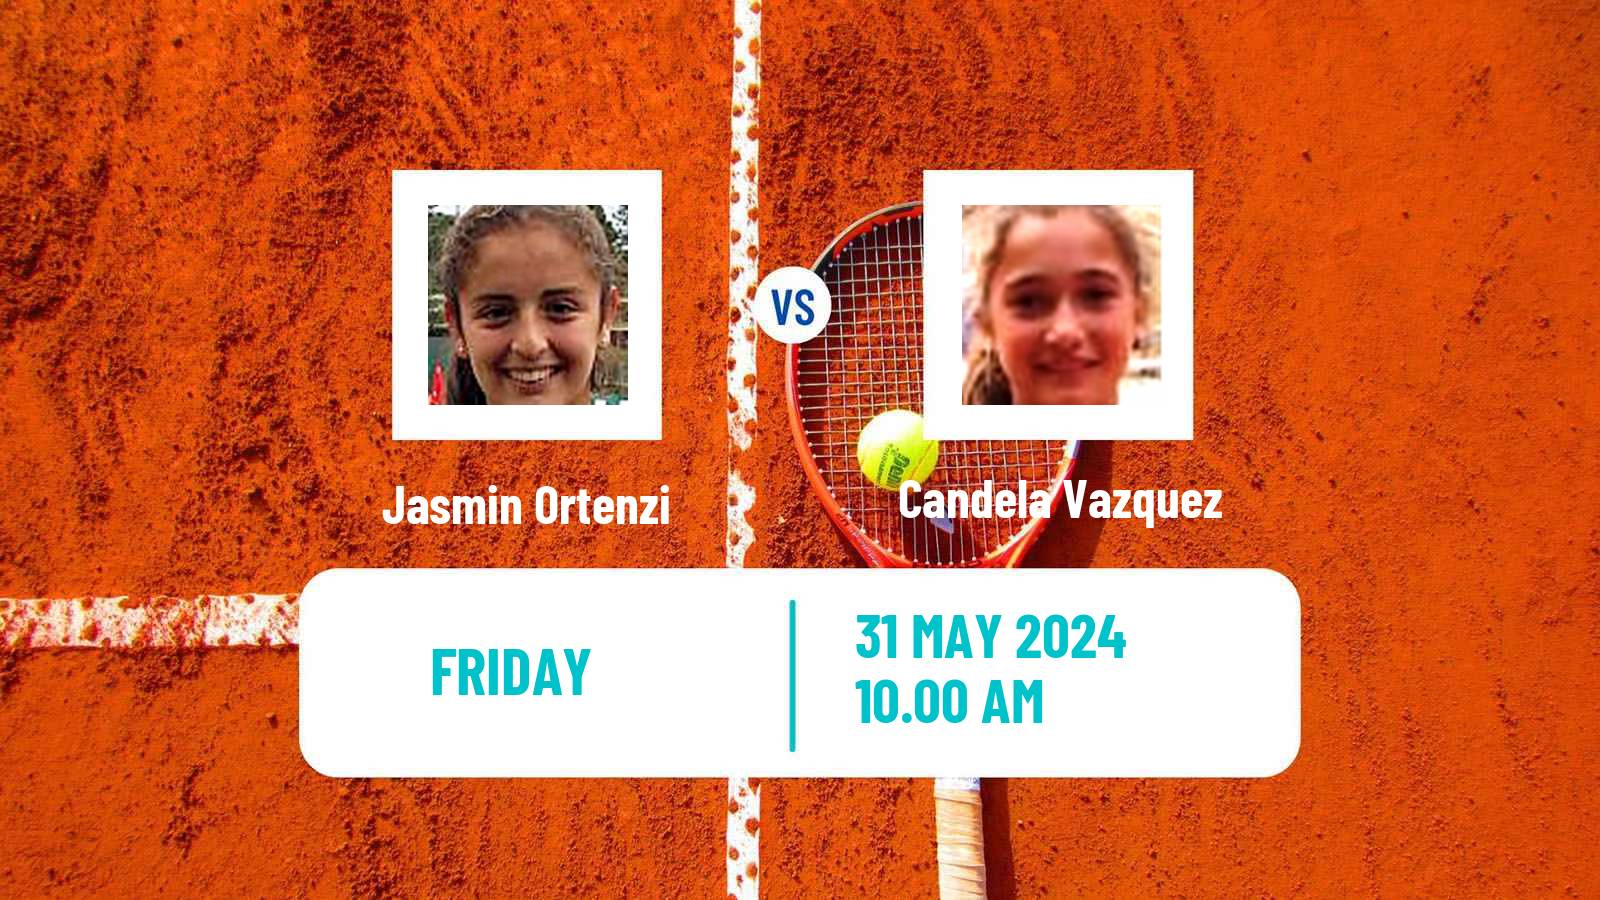 Tennis ITF W15 Rio Claro Women Jasmin Ortenzi - Candela Vazquez